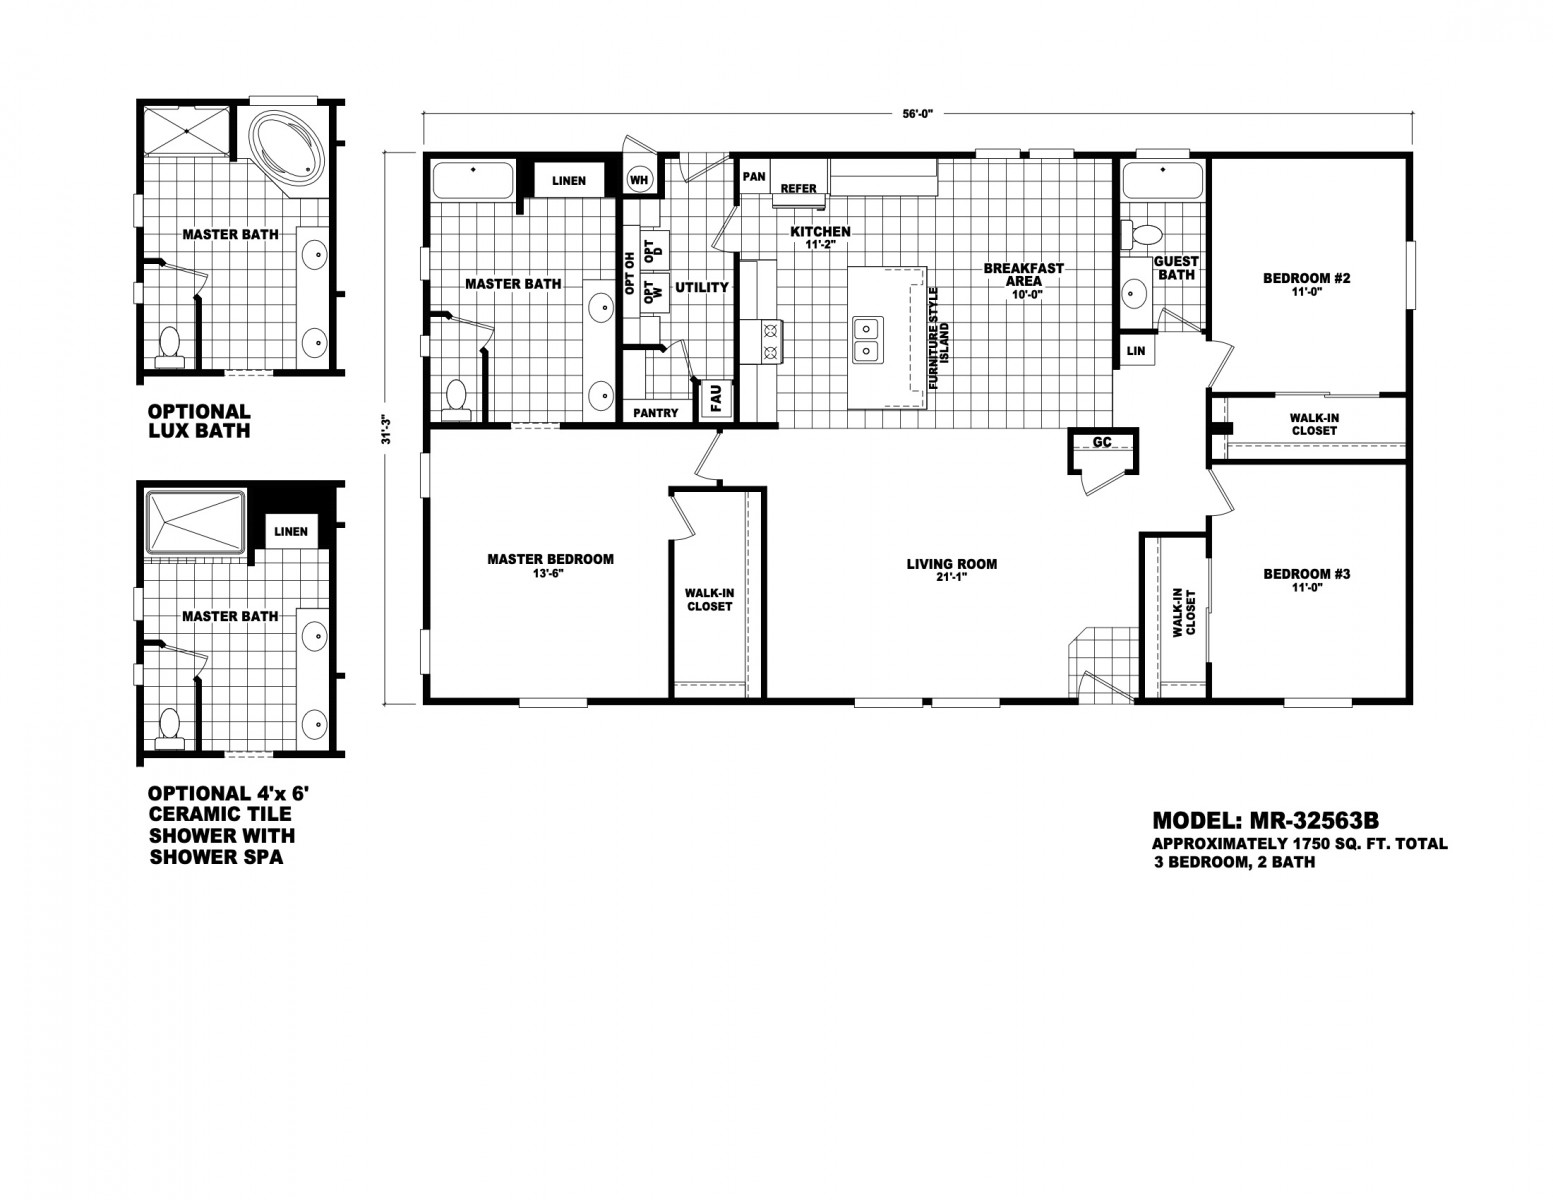 Homes Direct Modular Homes - Model MR32563B - Floorplan